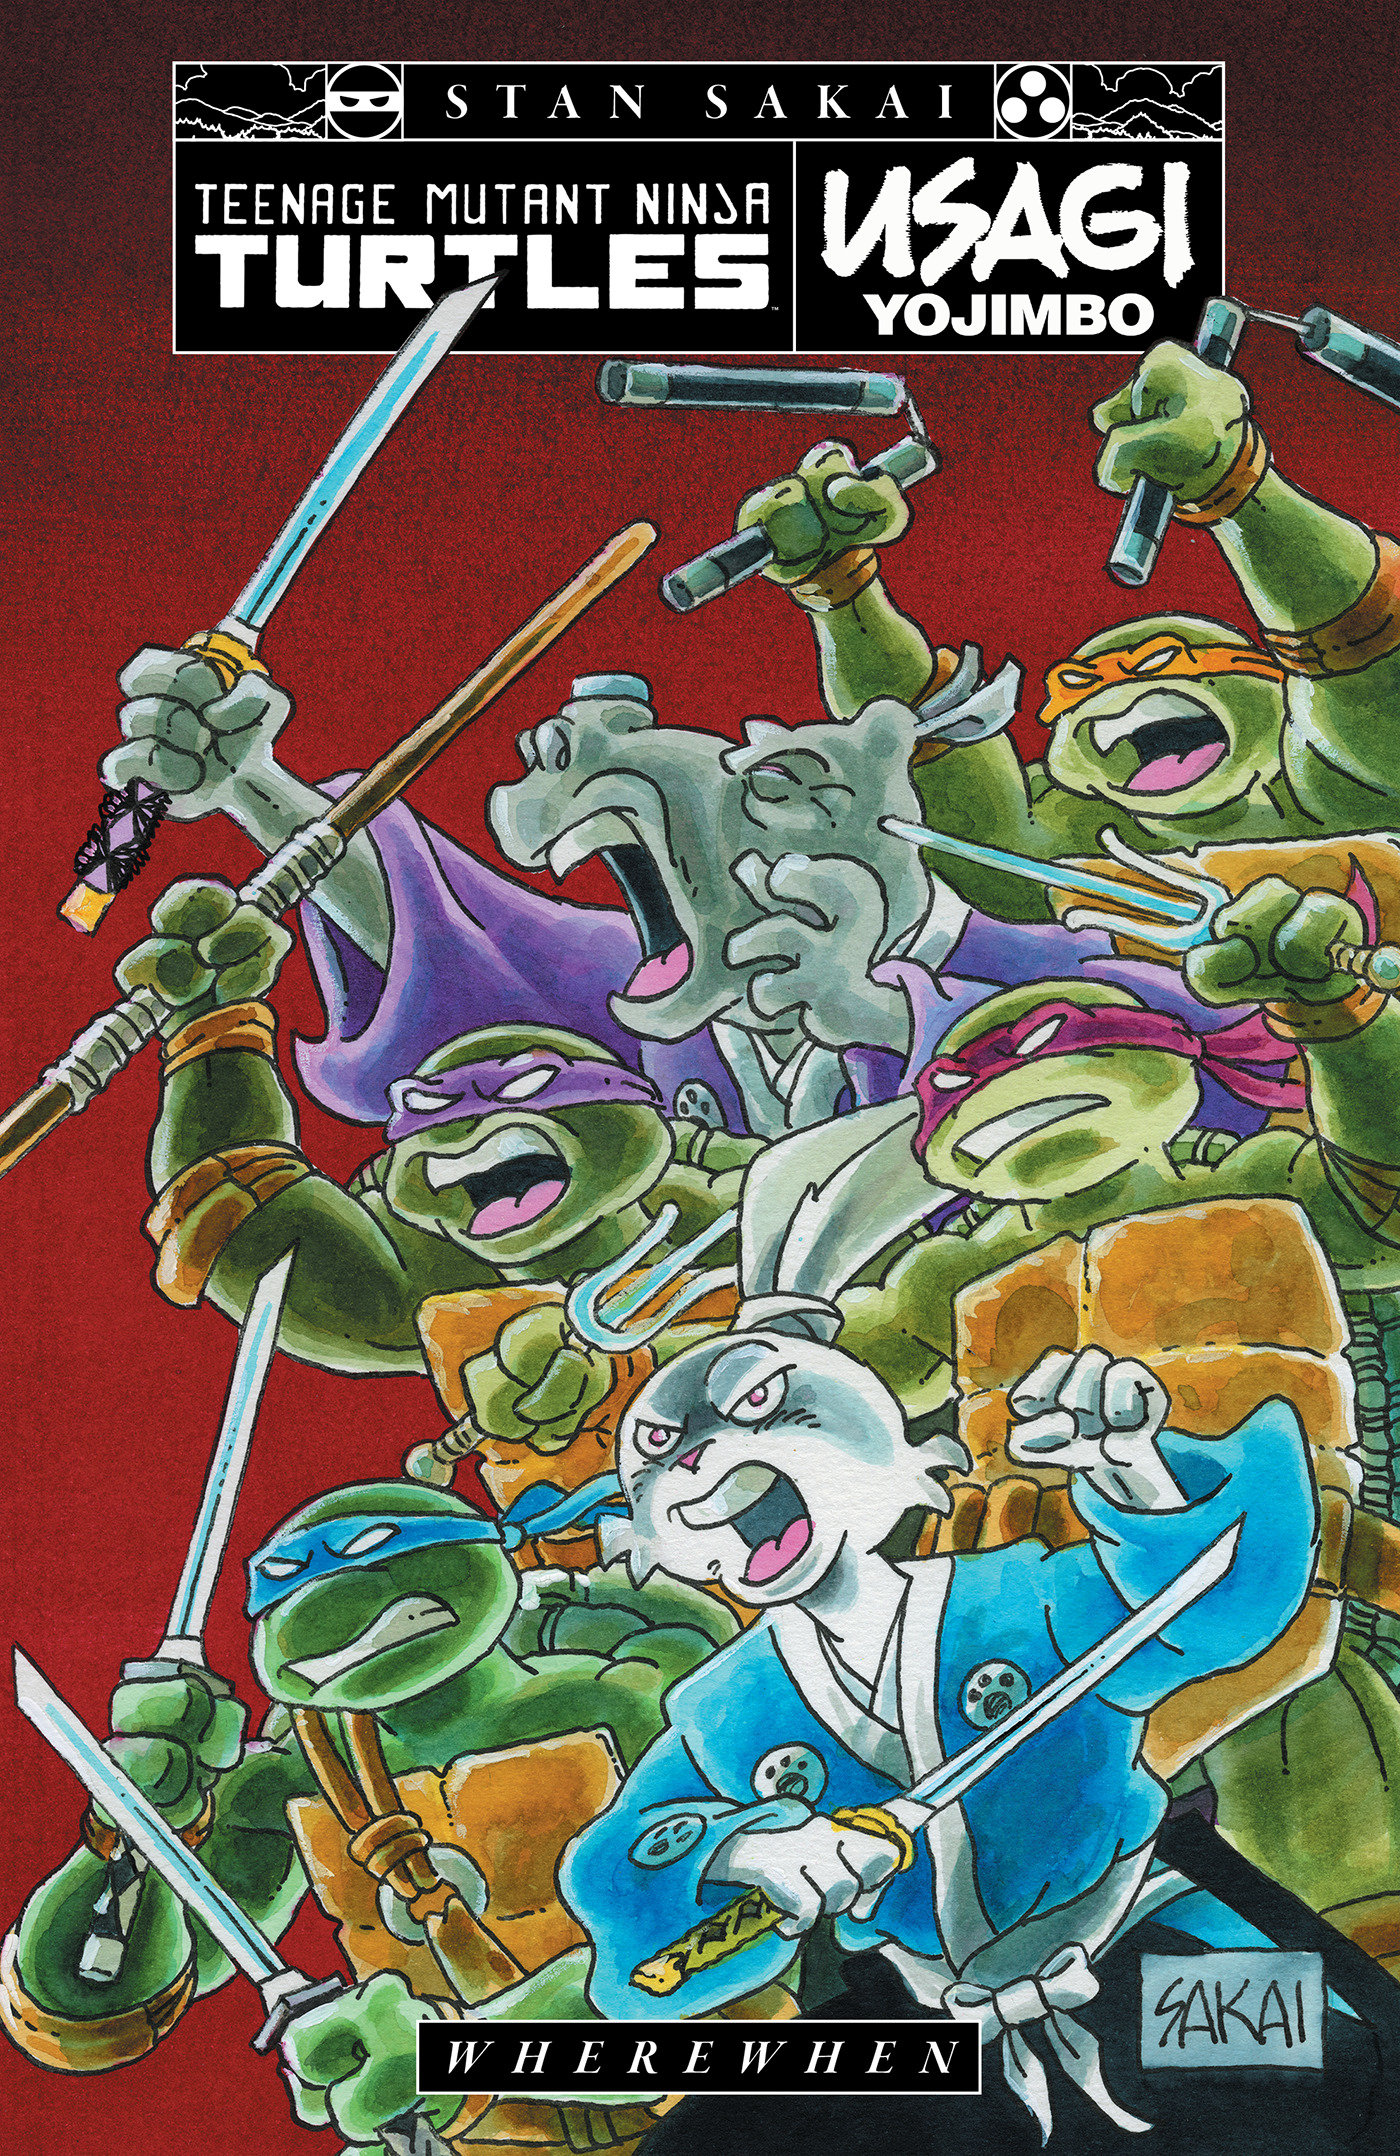 Teenage Mutant Ninja Turtles/Usagi Yojimbo Graphic Novel WhereWhen